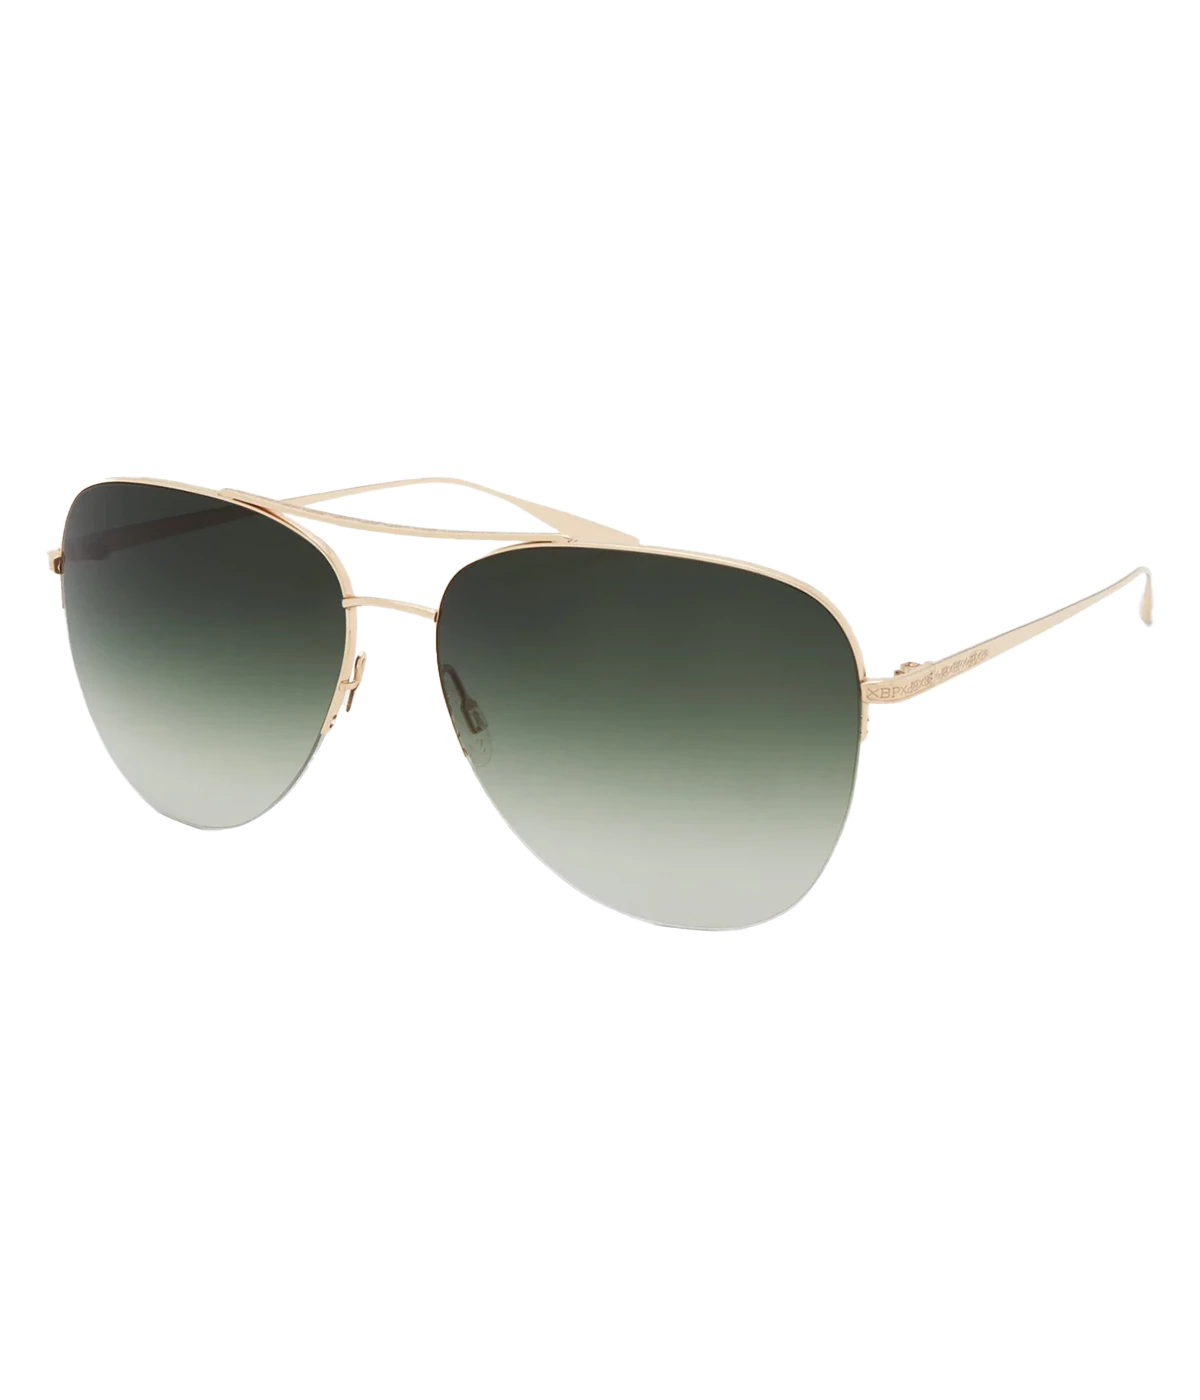 Chevalier Sunglasses in Gold & Green